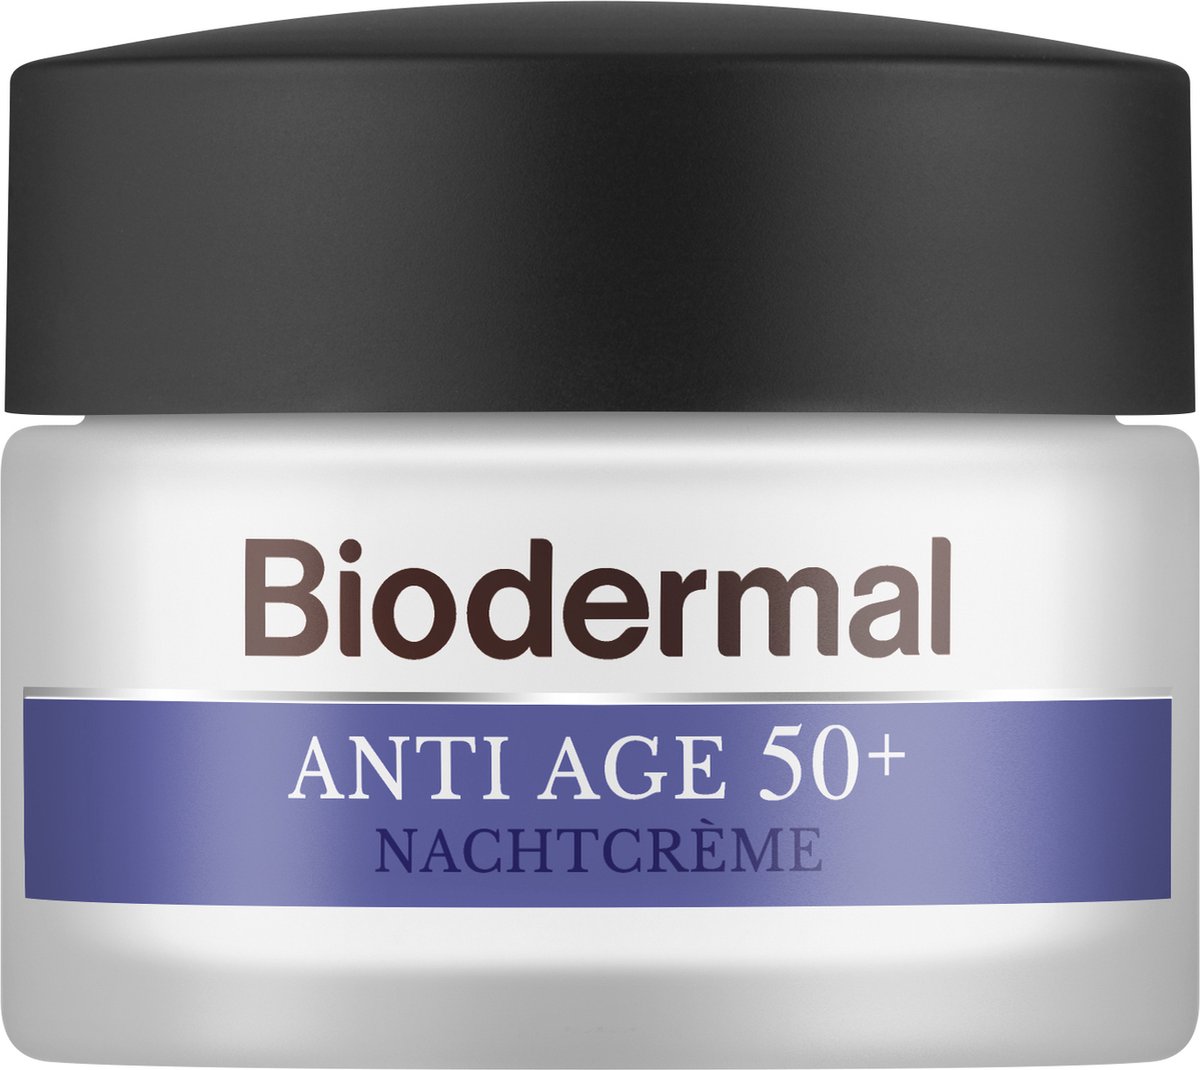 Biodermal Anti Age nachtcrème 50+ - Nachtcrème met niacinamide & sheaboter - Helpt rimpels verminderen - 50ml - Biodermal